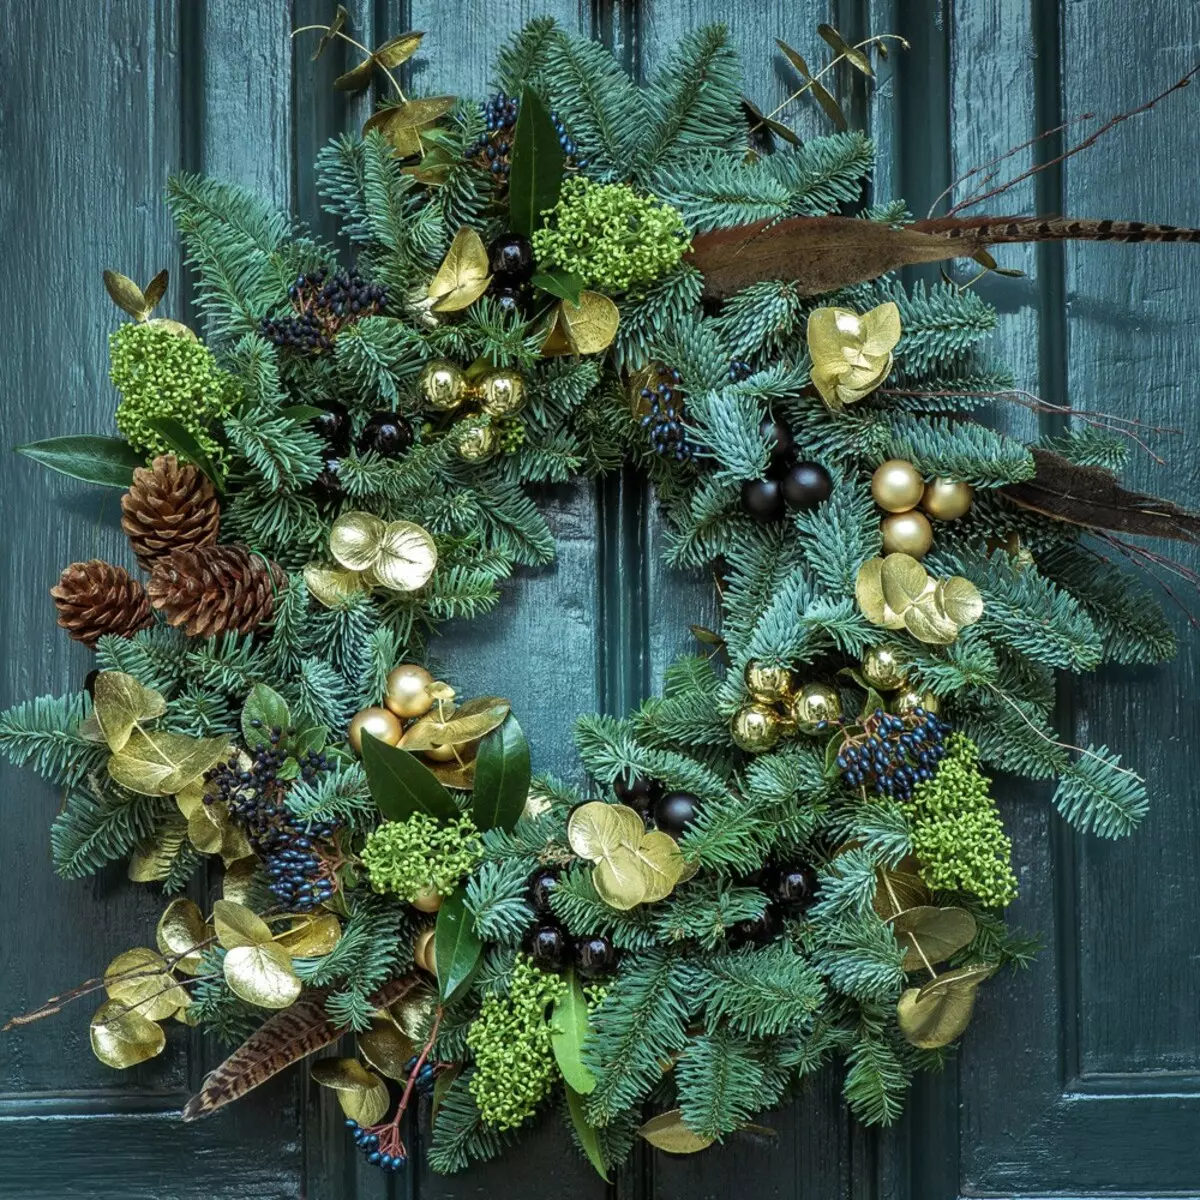 Krismas wreath nke fir alaka